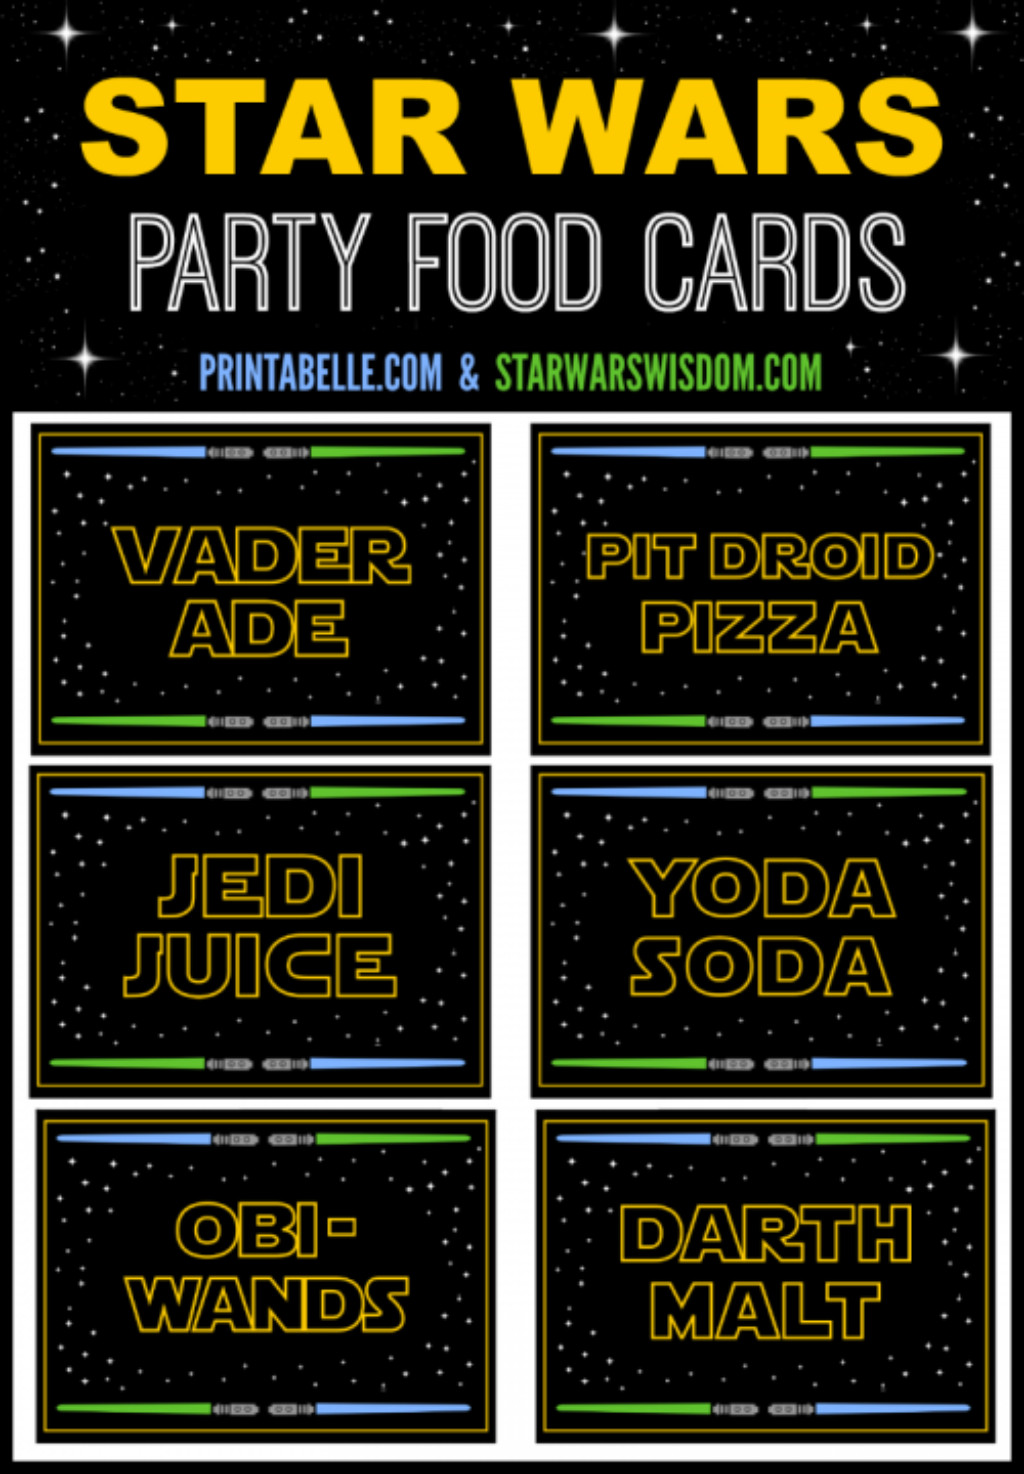 Star Wars Birthday Card Printable Free
 Star Wars Party Food Cards